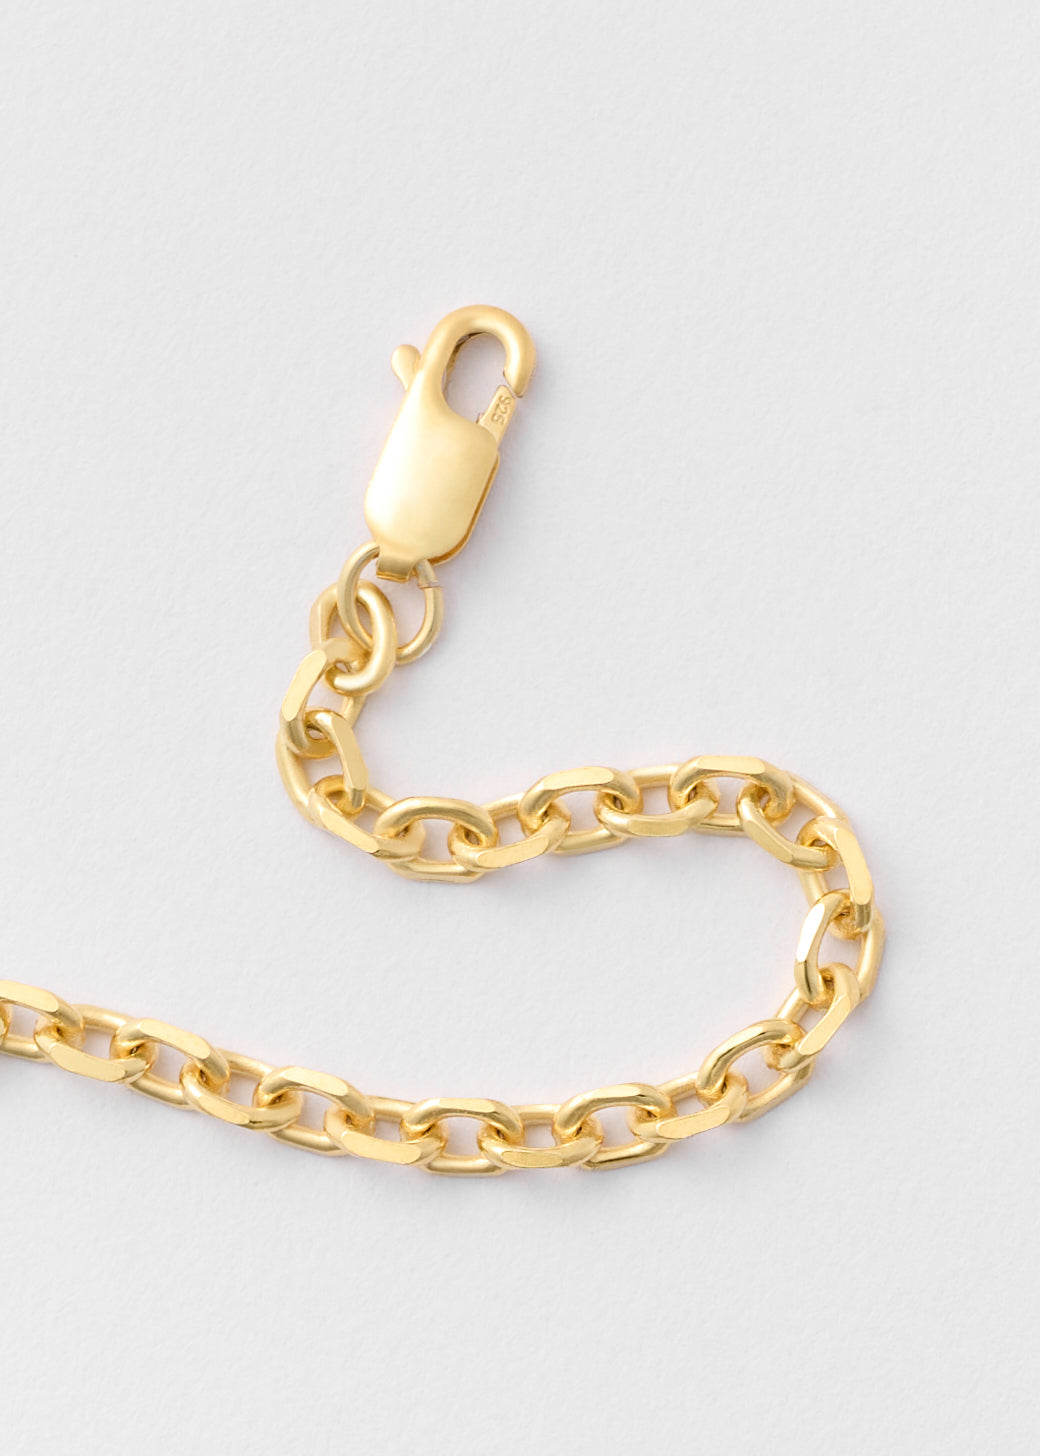 Thin gold Anchor bracelet